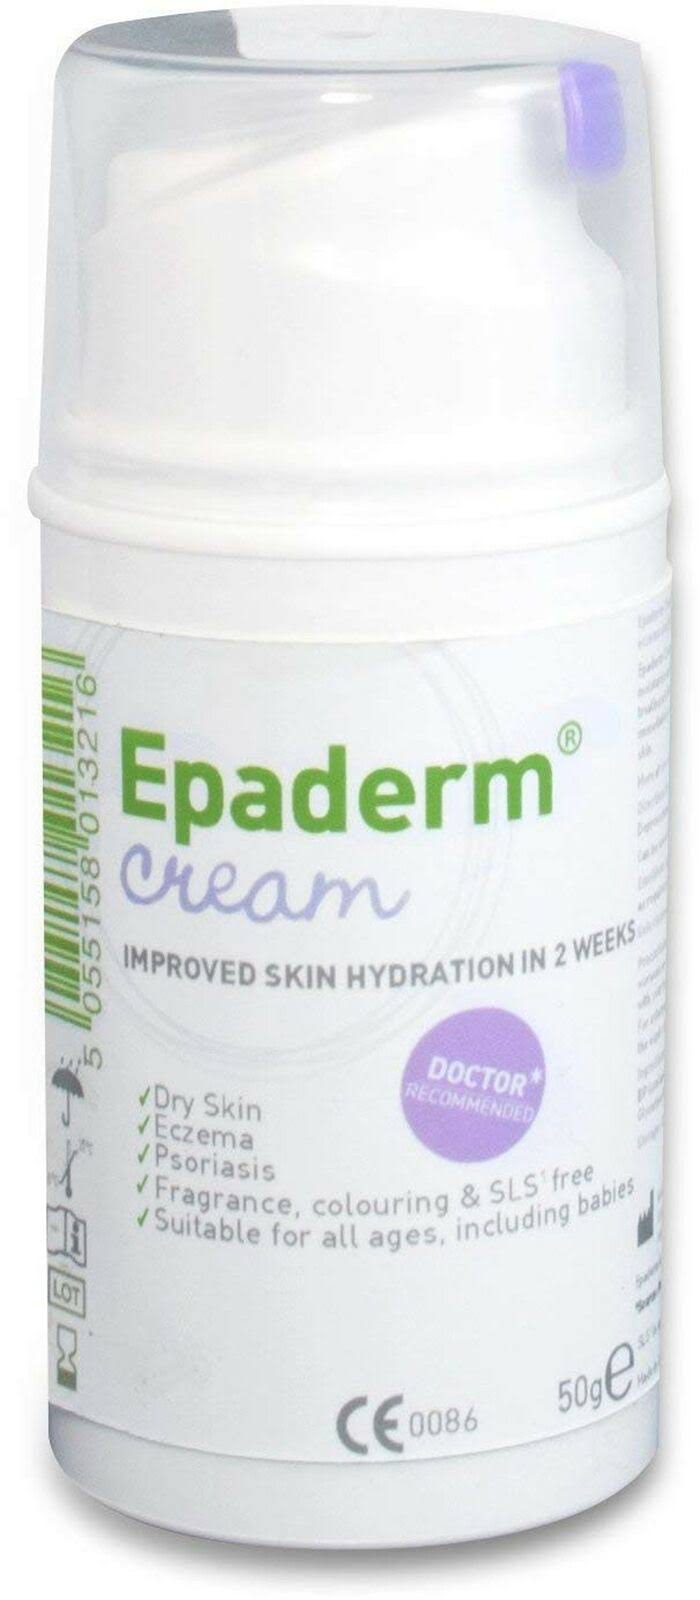 Epaderm 50 G Cream